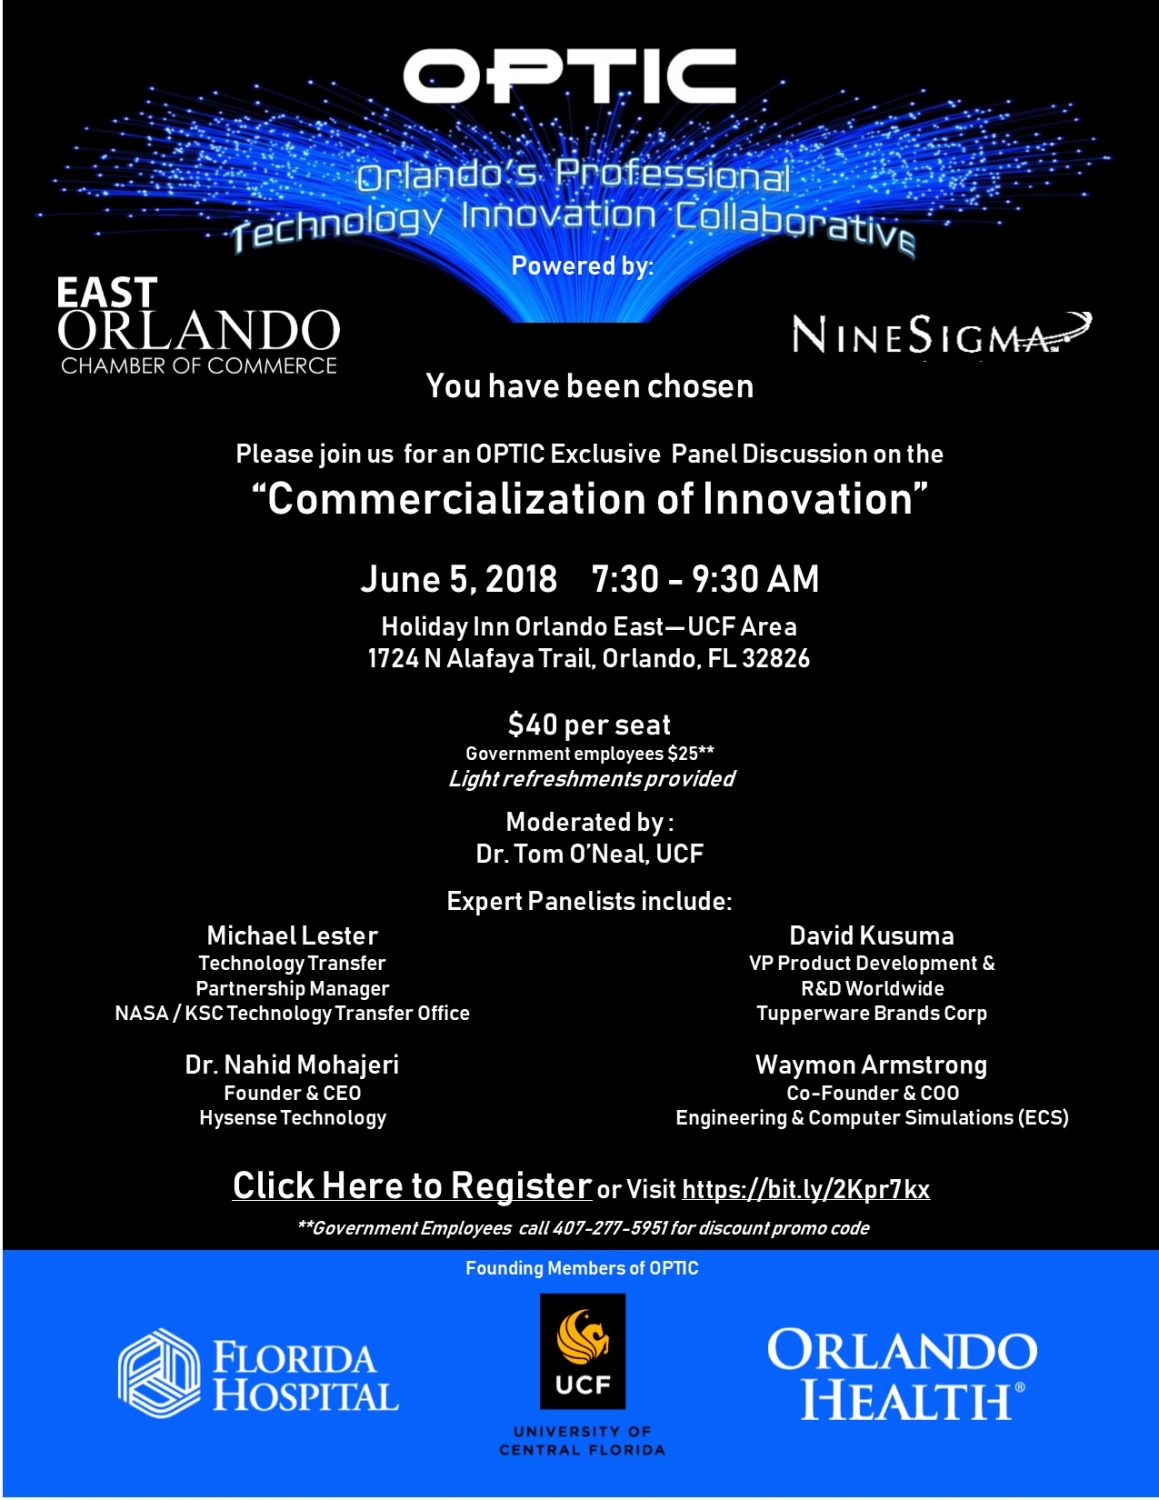 East Orlando Chamber Announces Optic Event 5 Jun 2018 National Center For Simulation